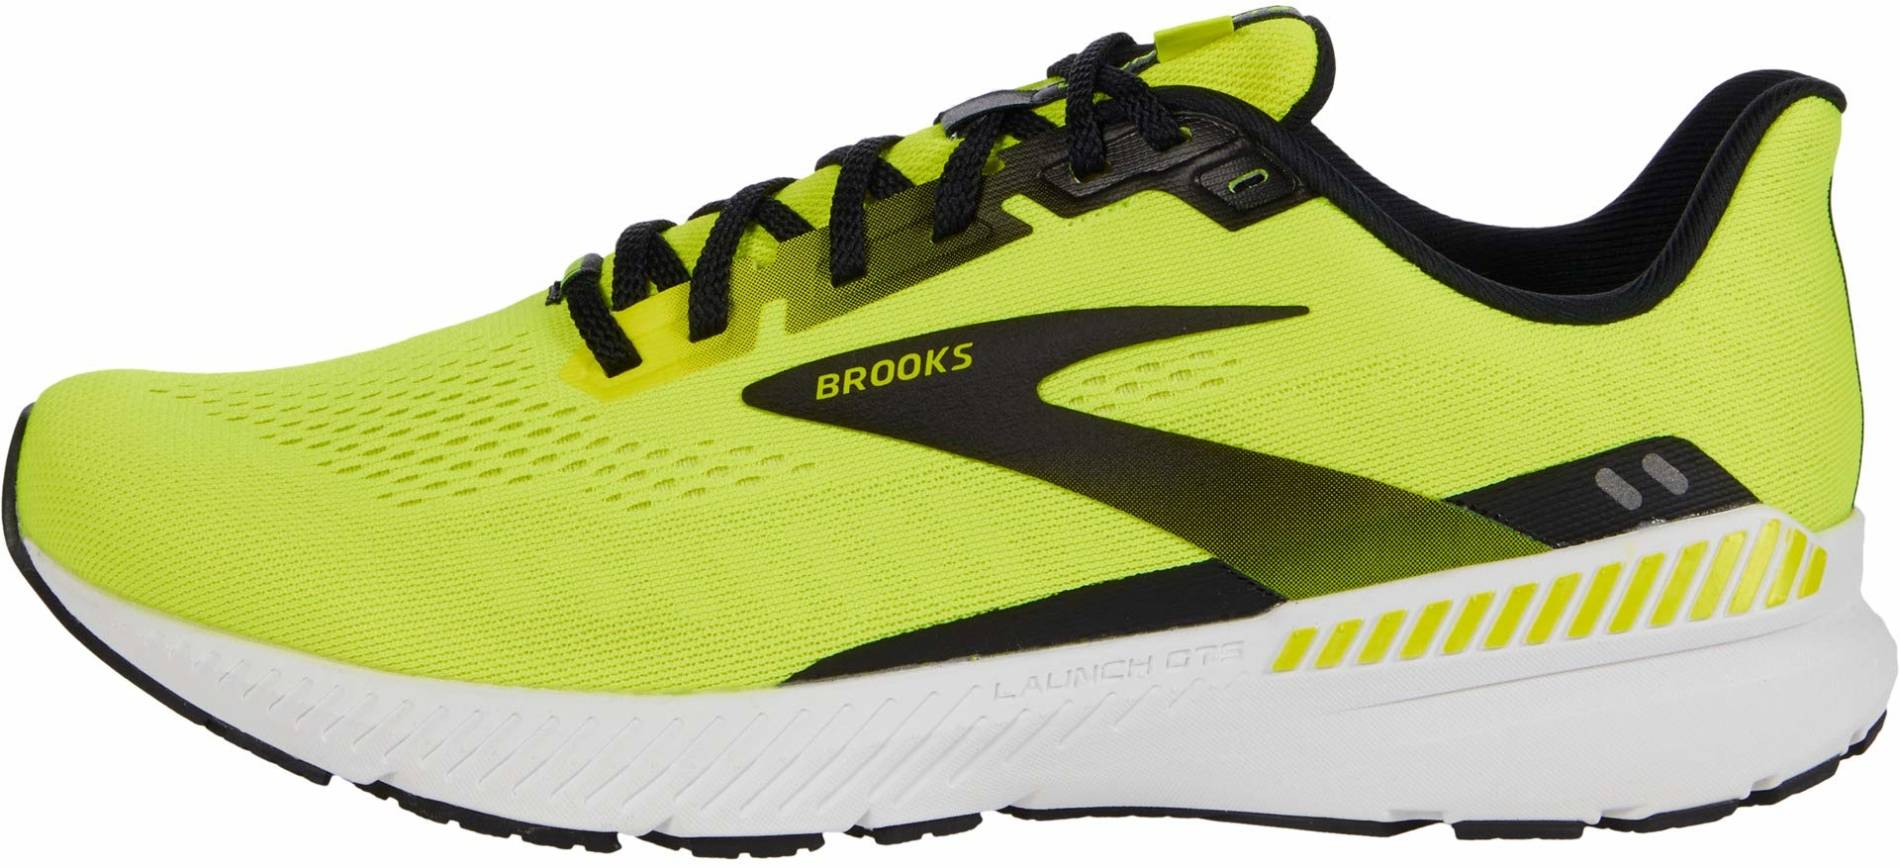 Brooks Launch GTS 8 Zapatillas para Correr Hombre